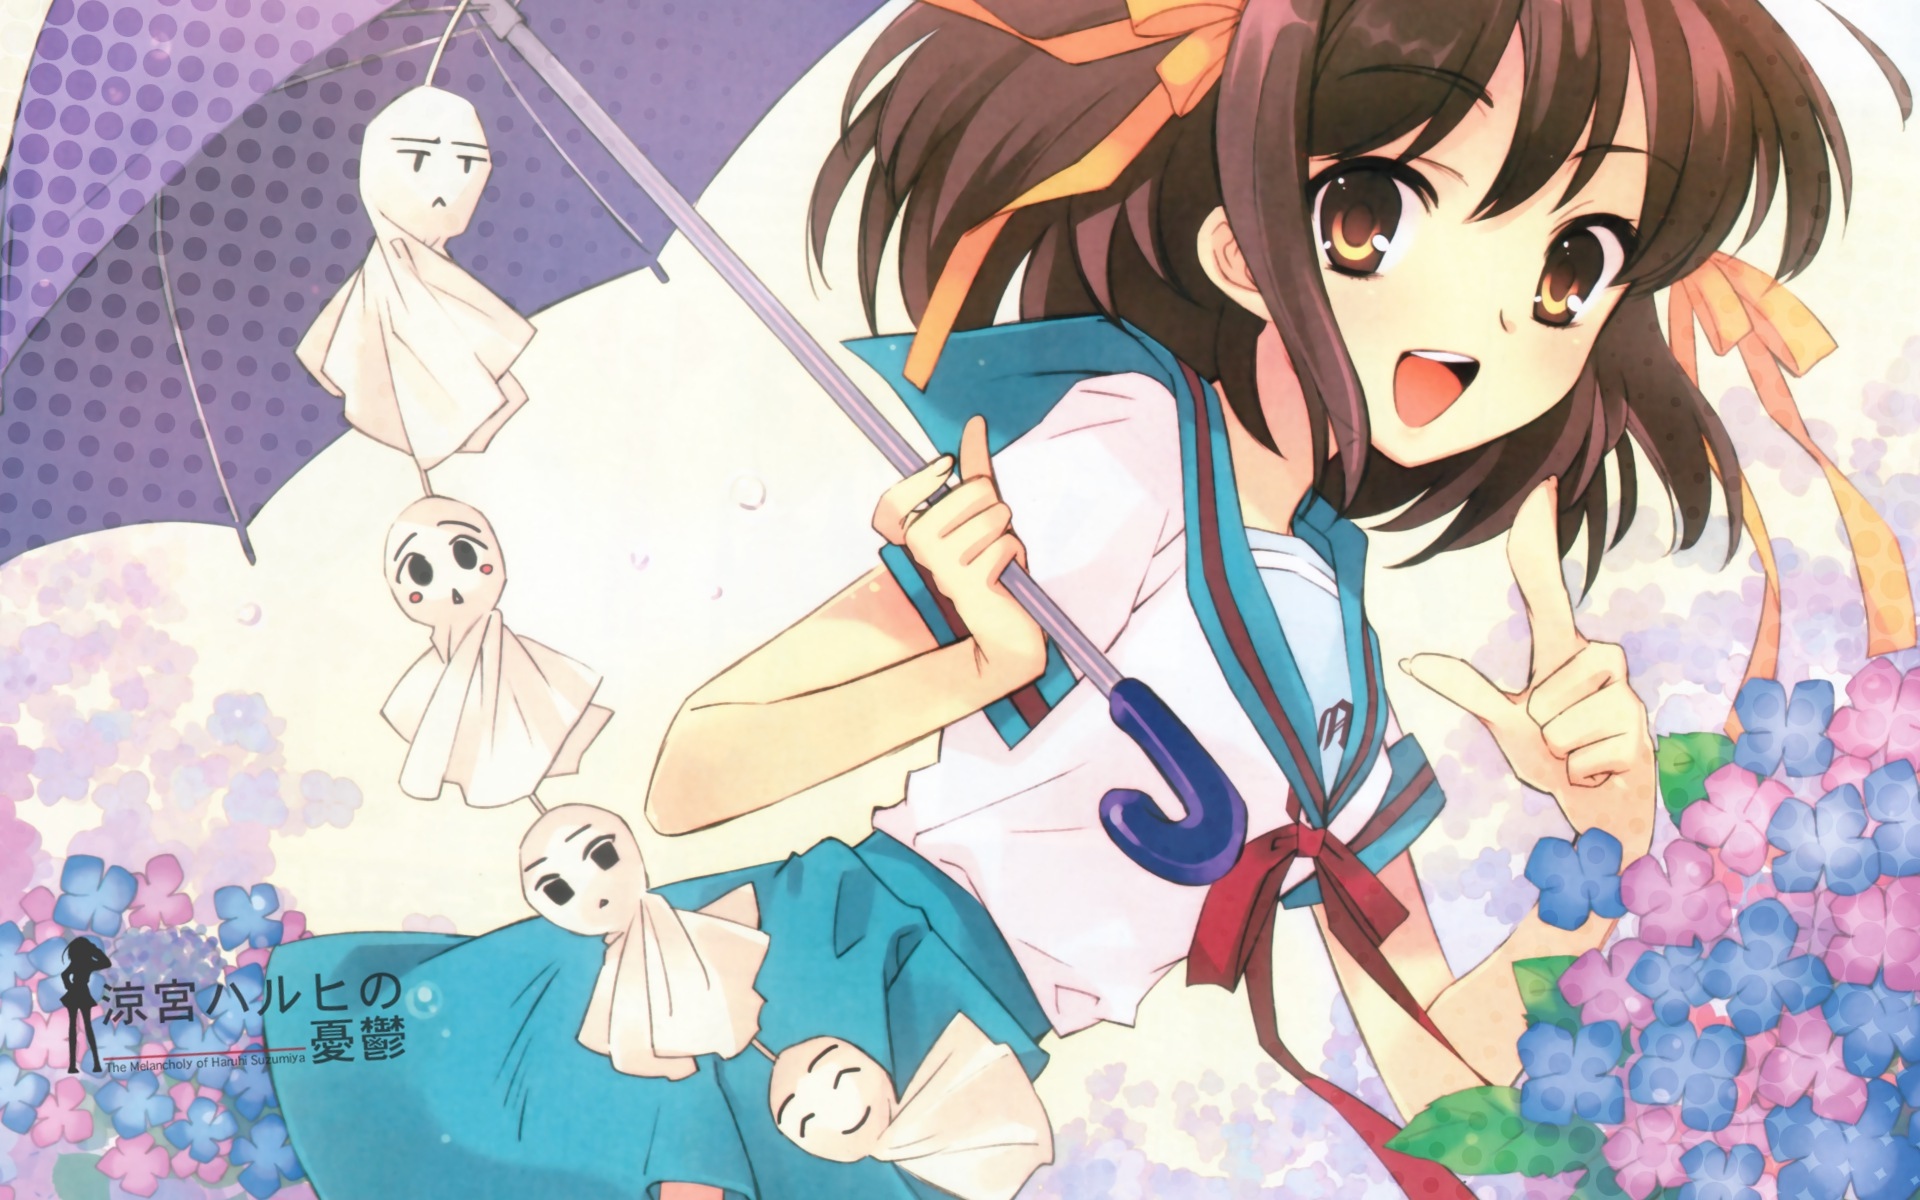 Haruhi Suzumiya with a Teru Teru Bozu in an anime wallpaper.